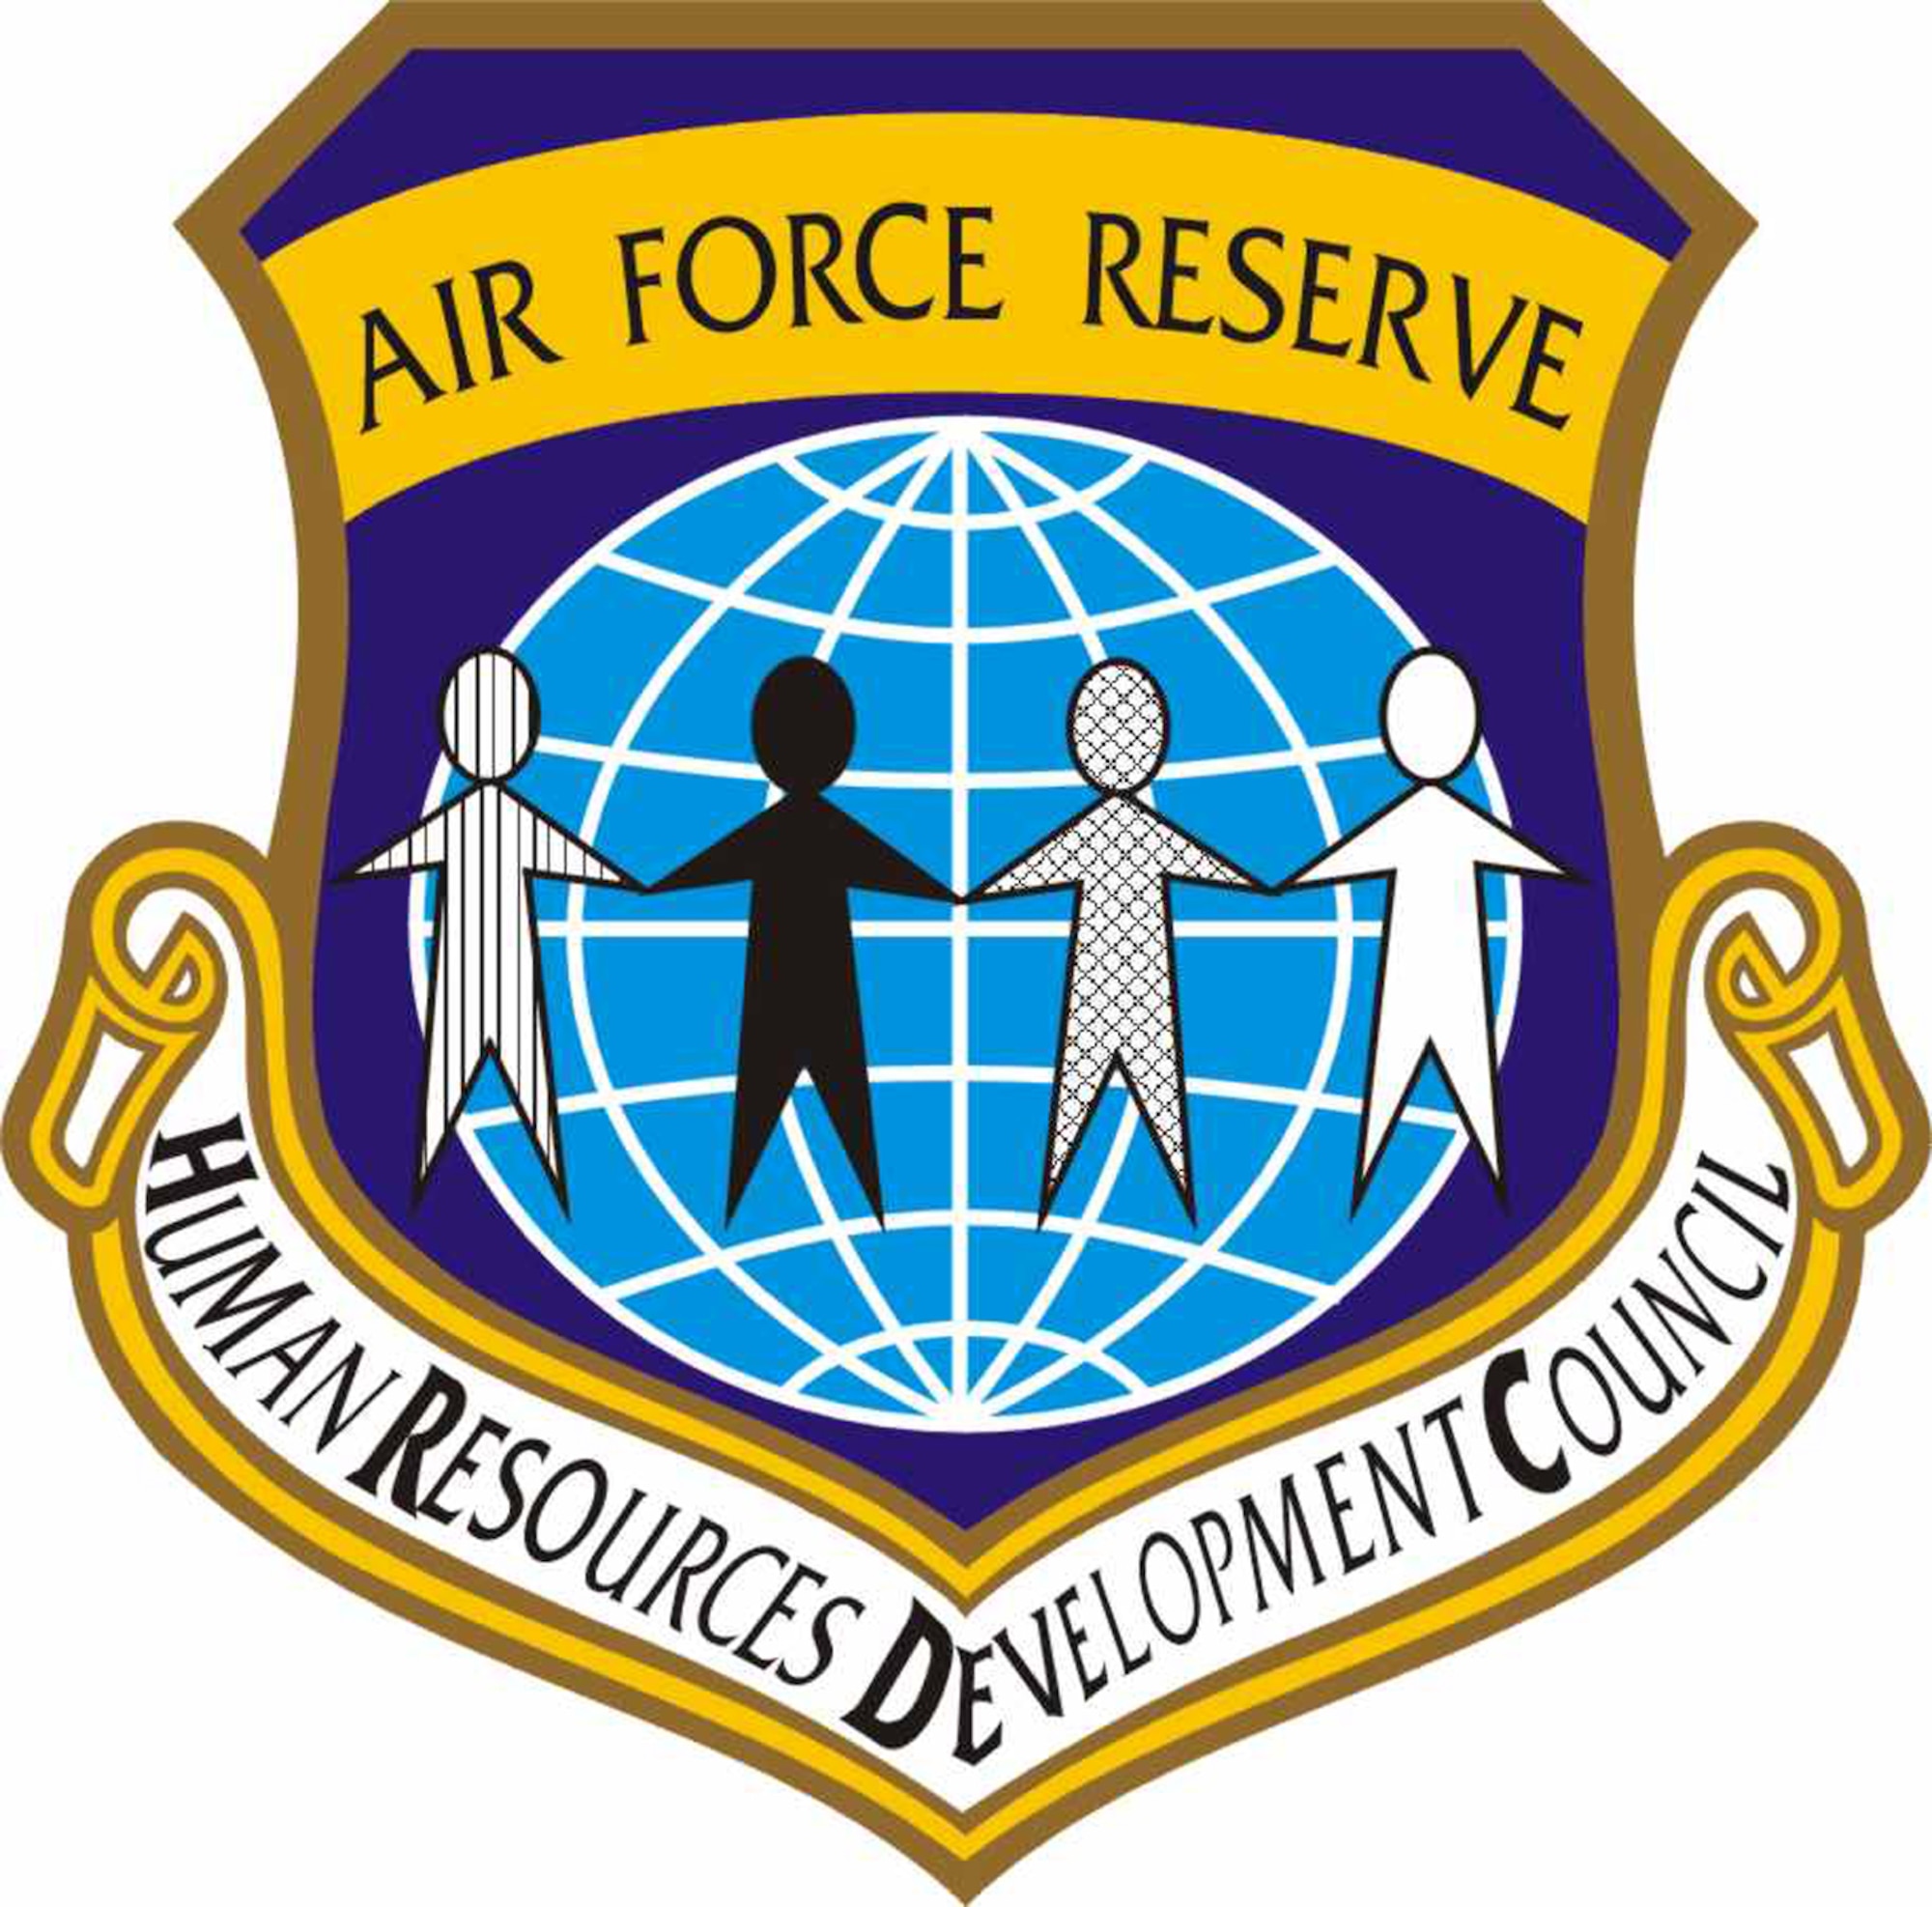 The Air Force Reserve Command's Human Resources Development Council emblem. (U.S. Air Force graphic)